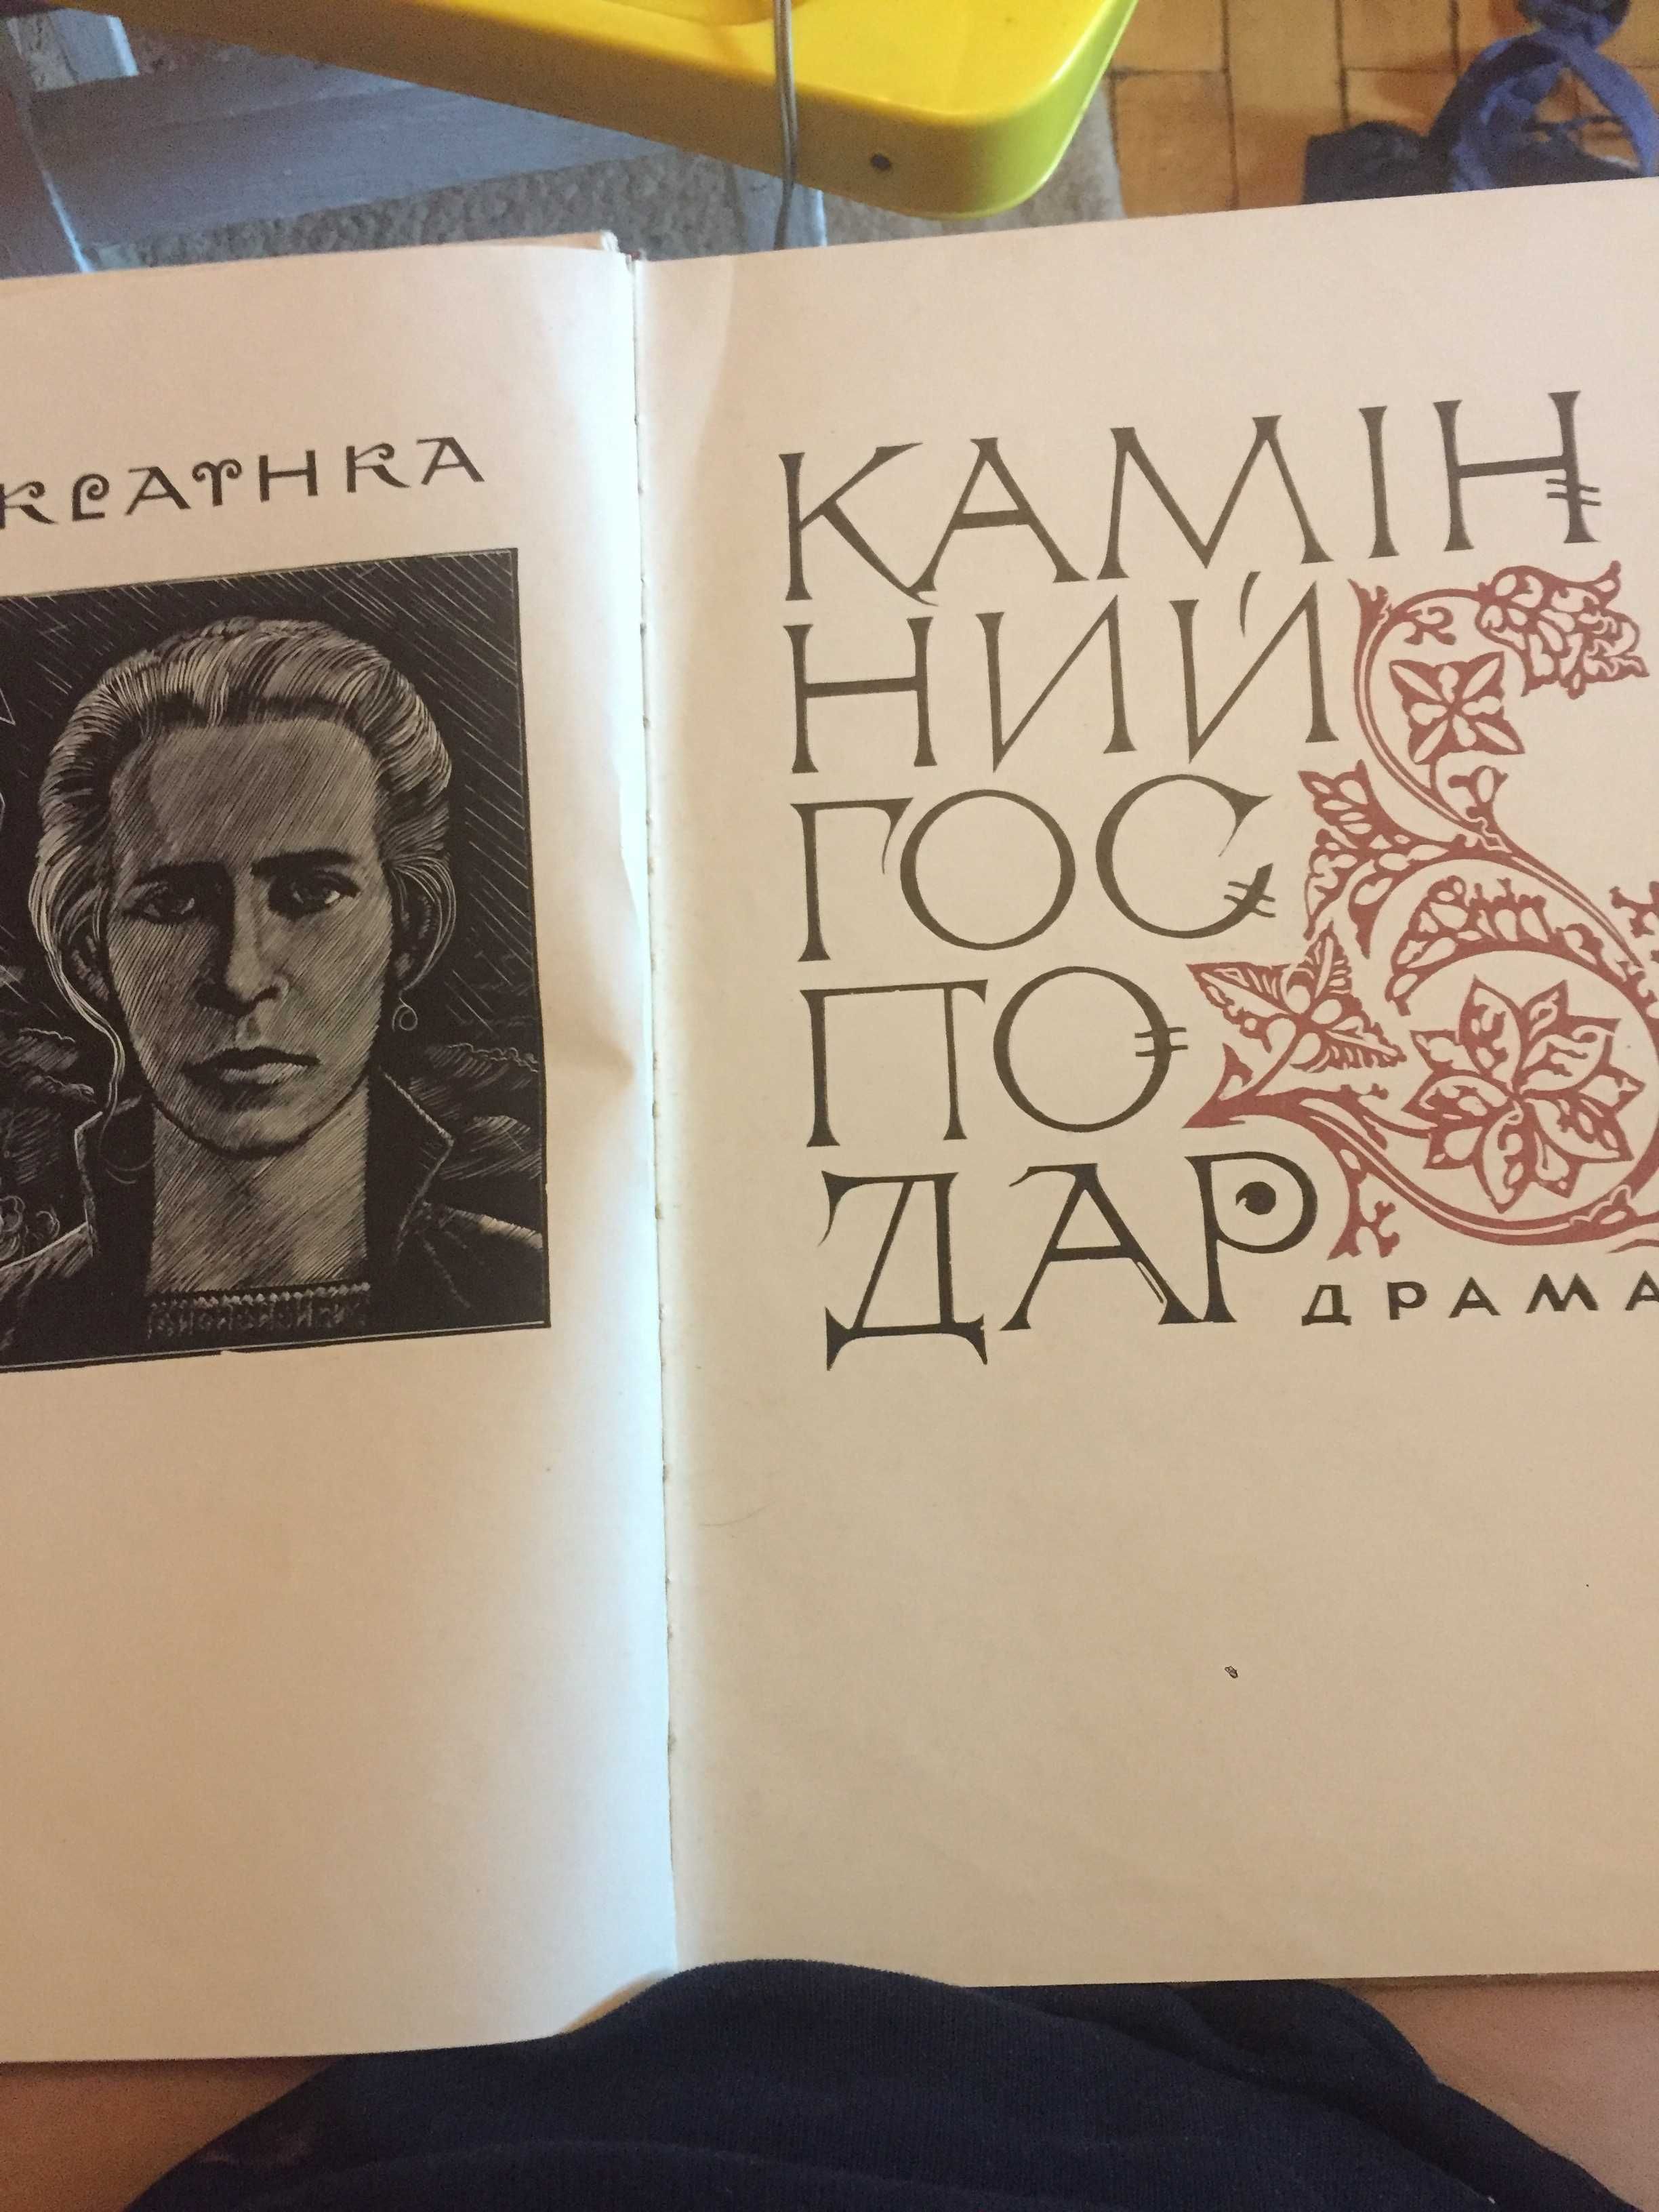 Журналы Мод 1950-1990 -80 шт.Книги про шитье, музыку, культуру, театр.